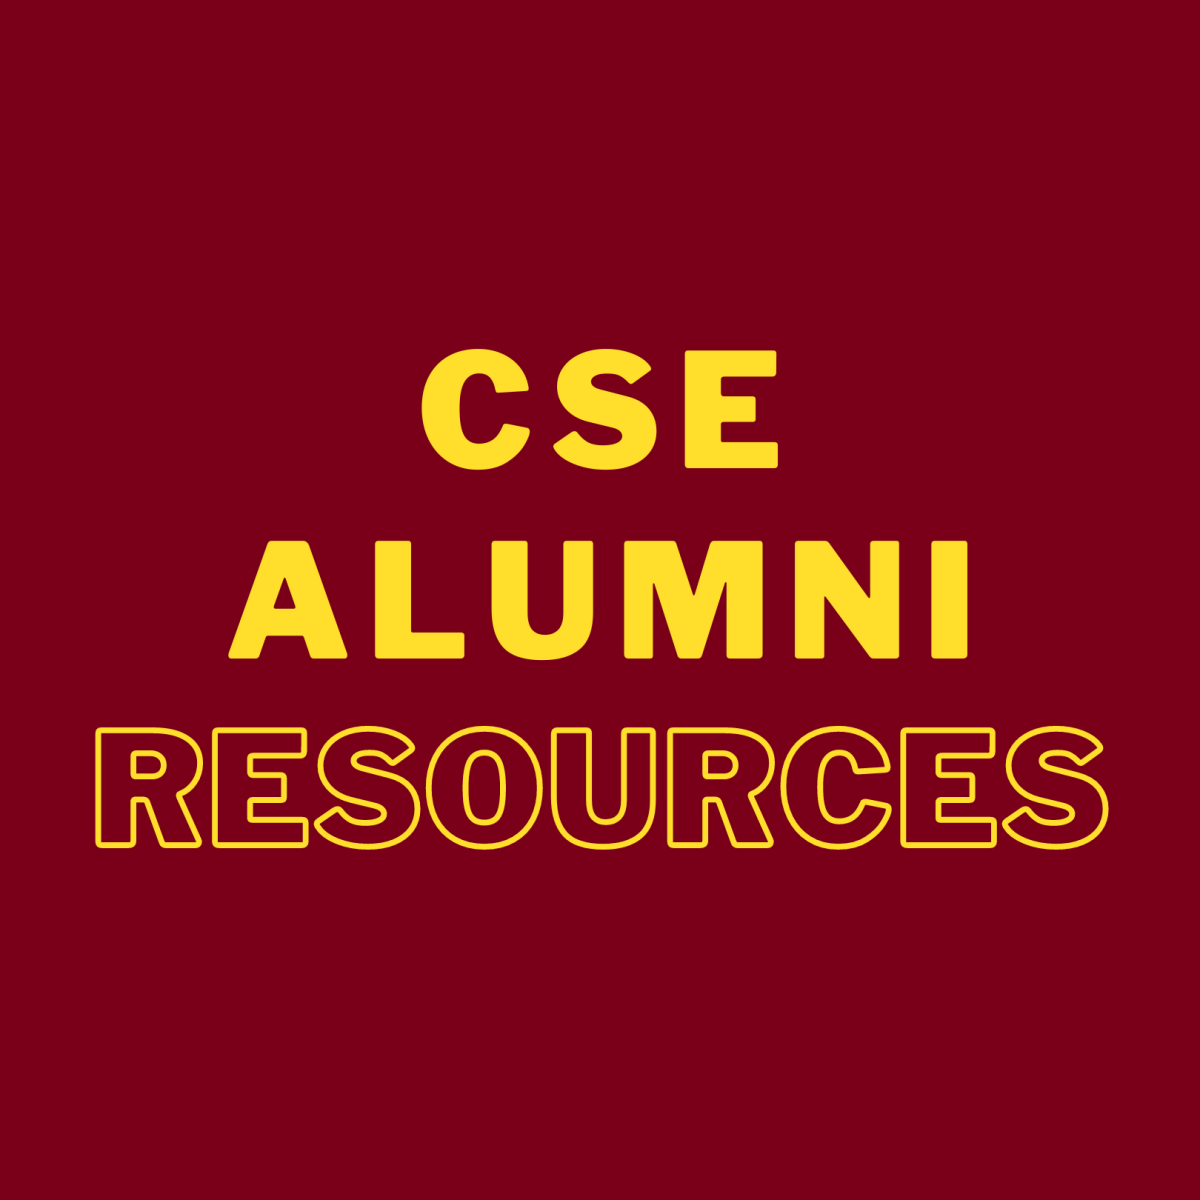 CSE Alumni Resources Cover.png